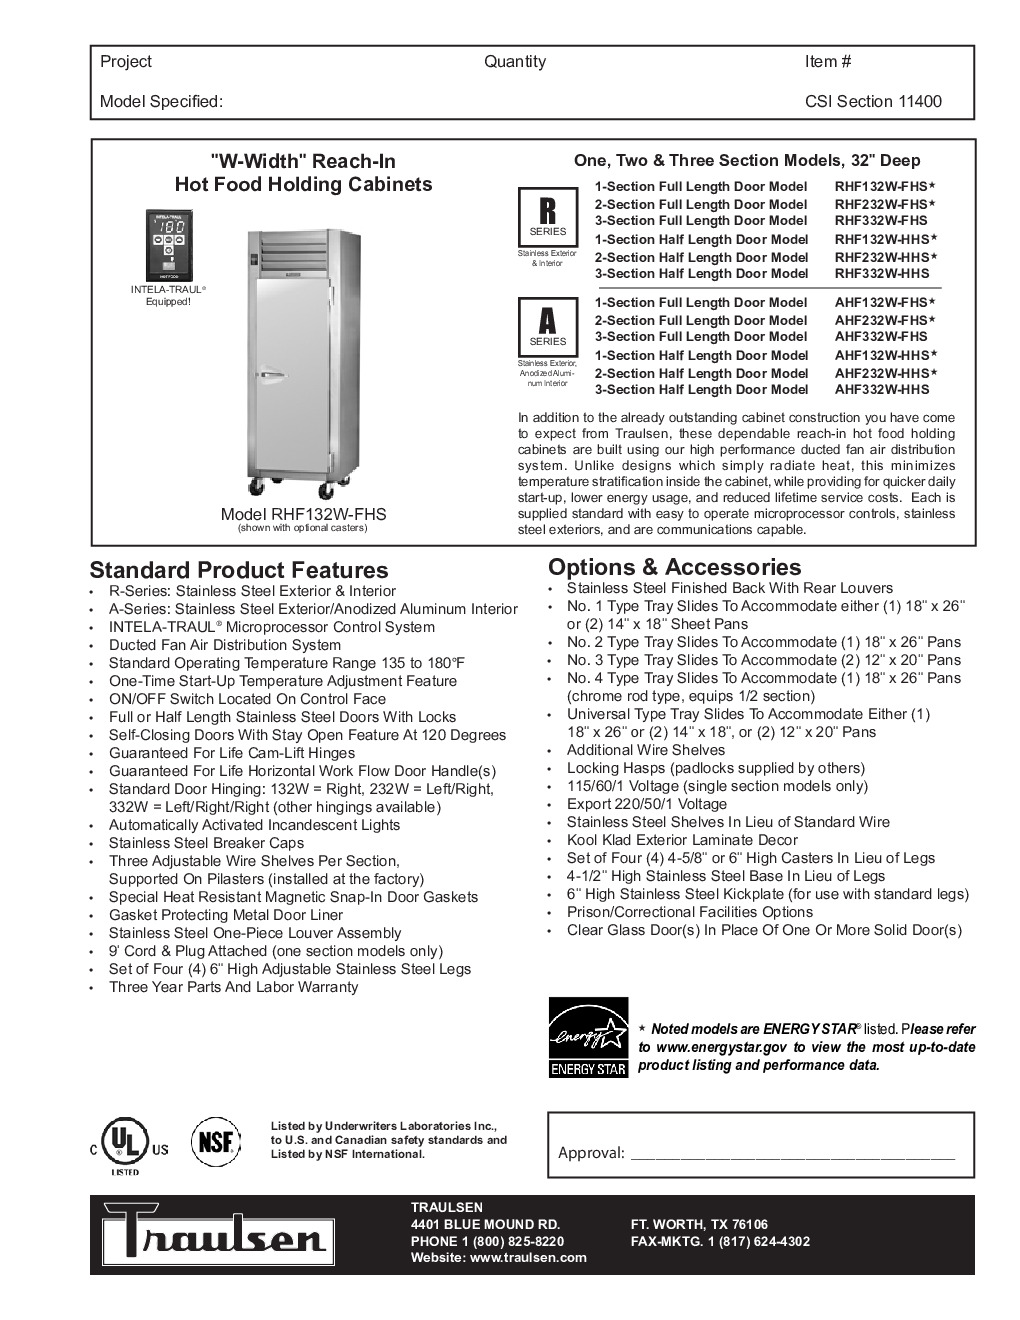 Traulsen AHF332W-HHG Reach-In Heated Cabinet